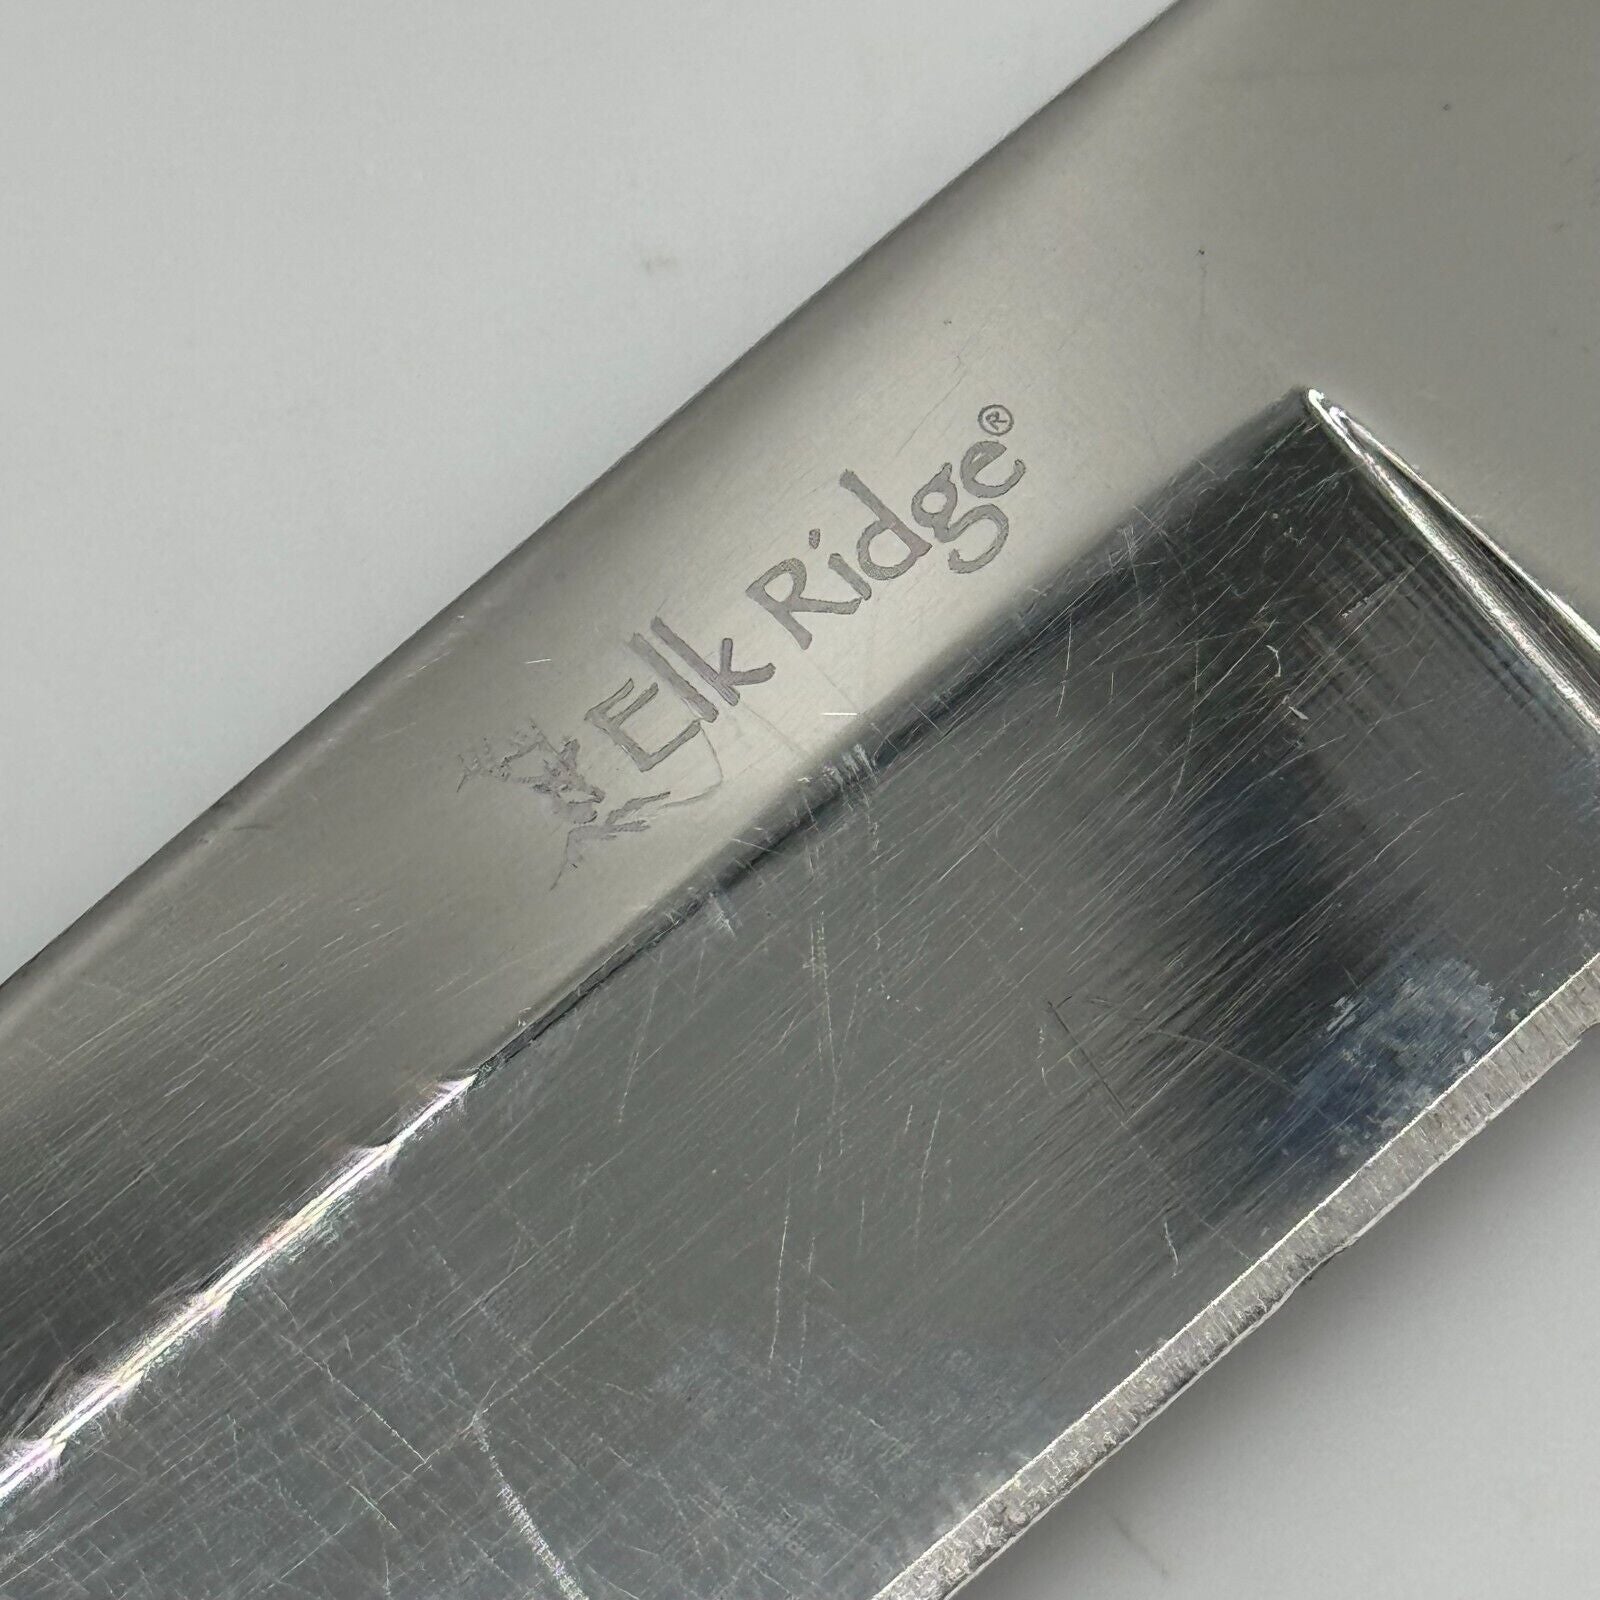 ELK RIDGE Fixed Blade Knife with Leather Sheath ER-200-24BR